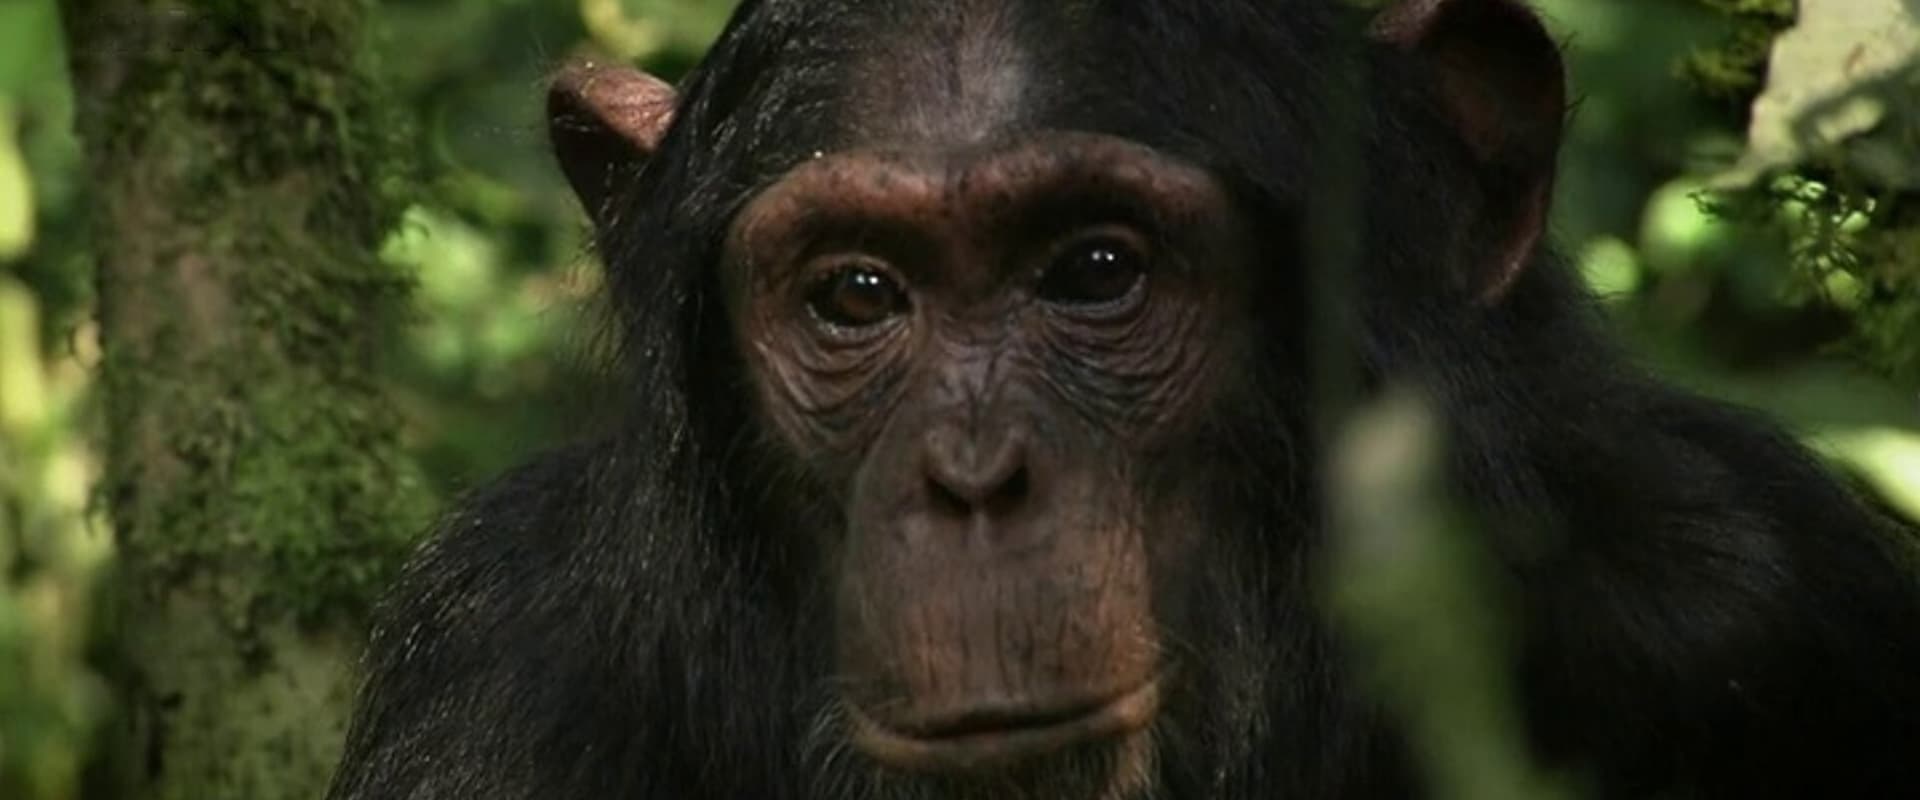 Das Geheimnis der Affen - Kulturforschung bei Schimpansen